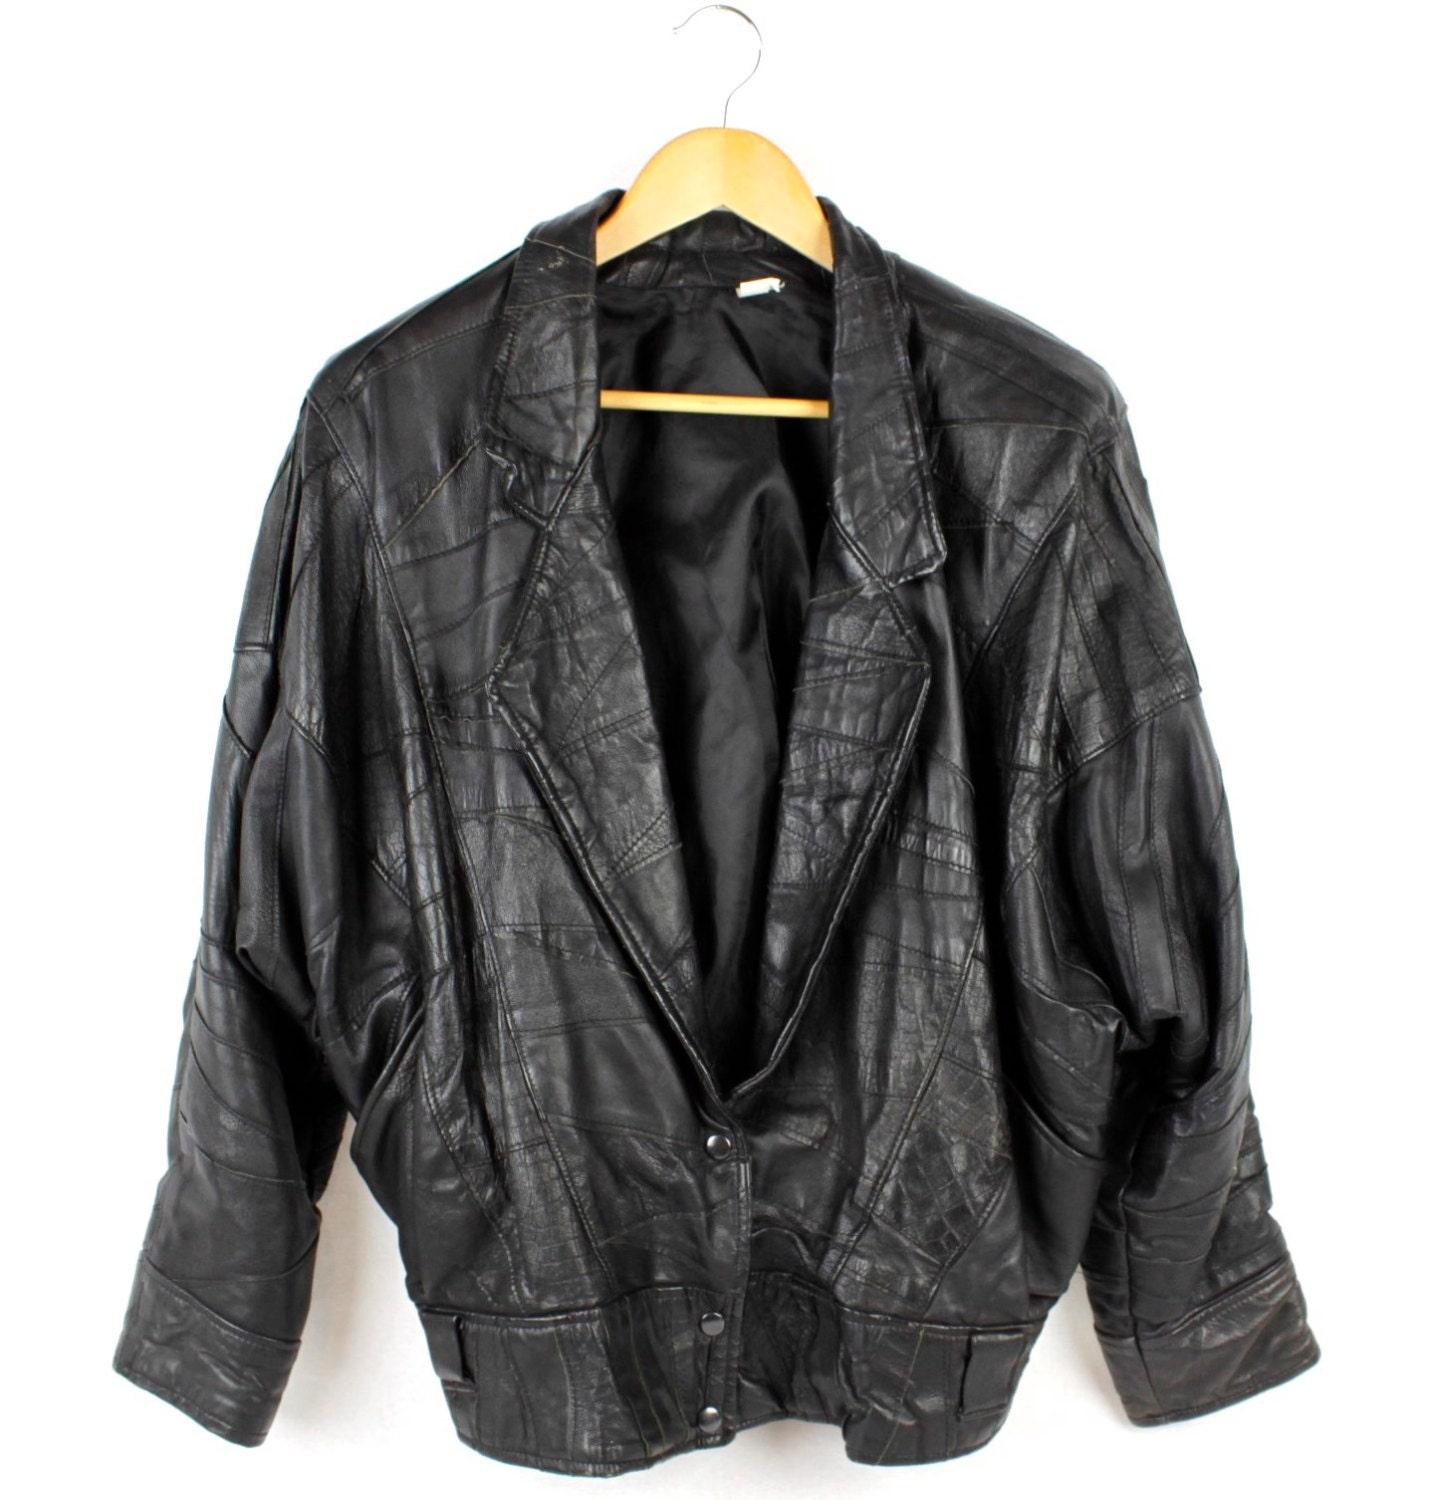 Vintage 80s Genuine Leather Jacket Black Patchwork by FannyAdamsVC